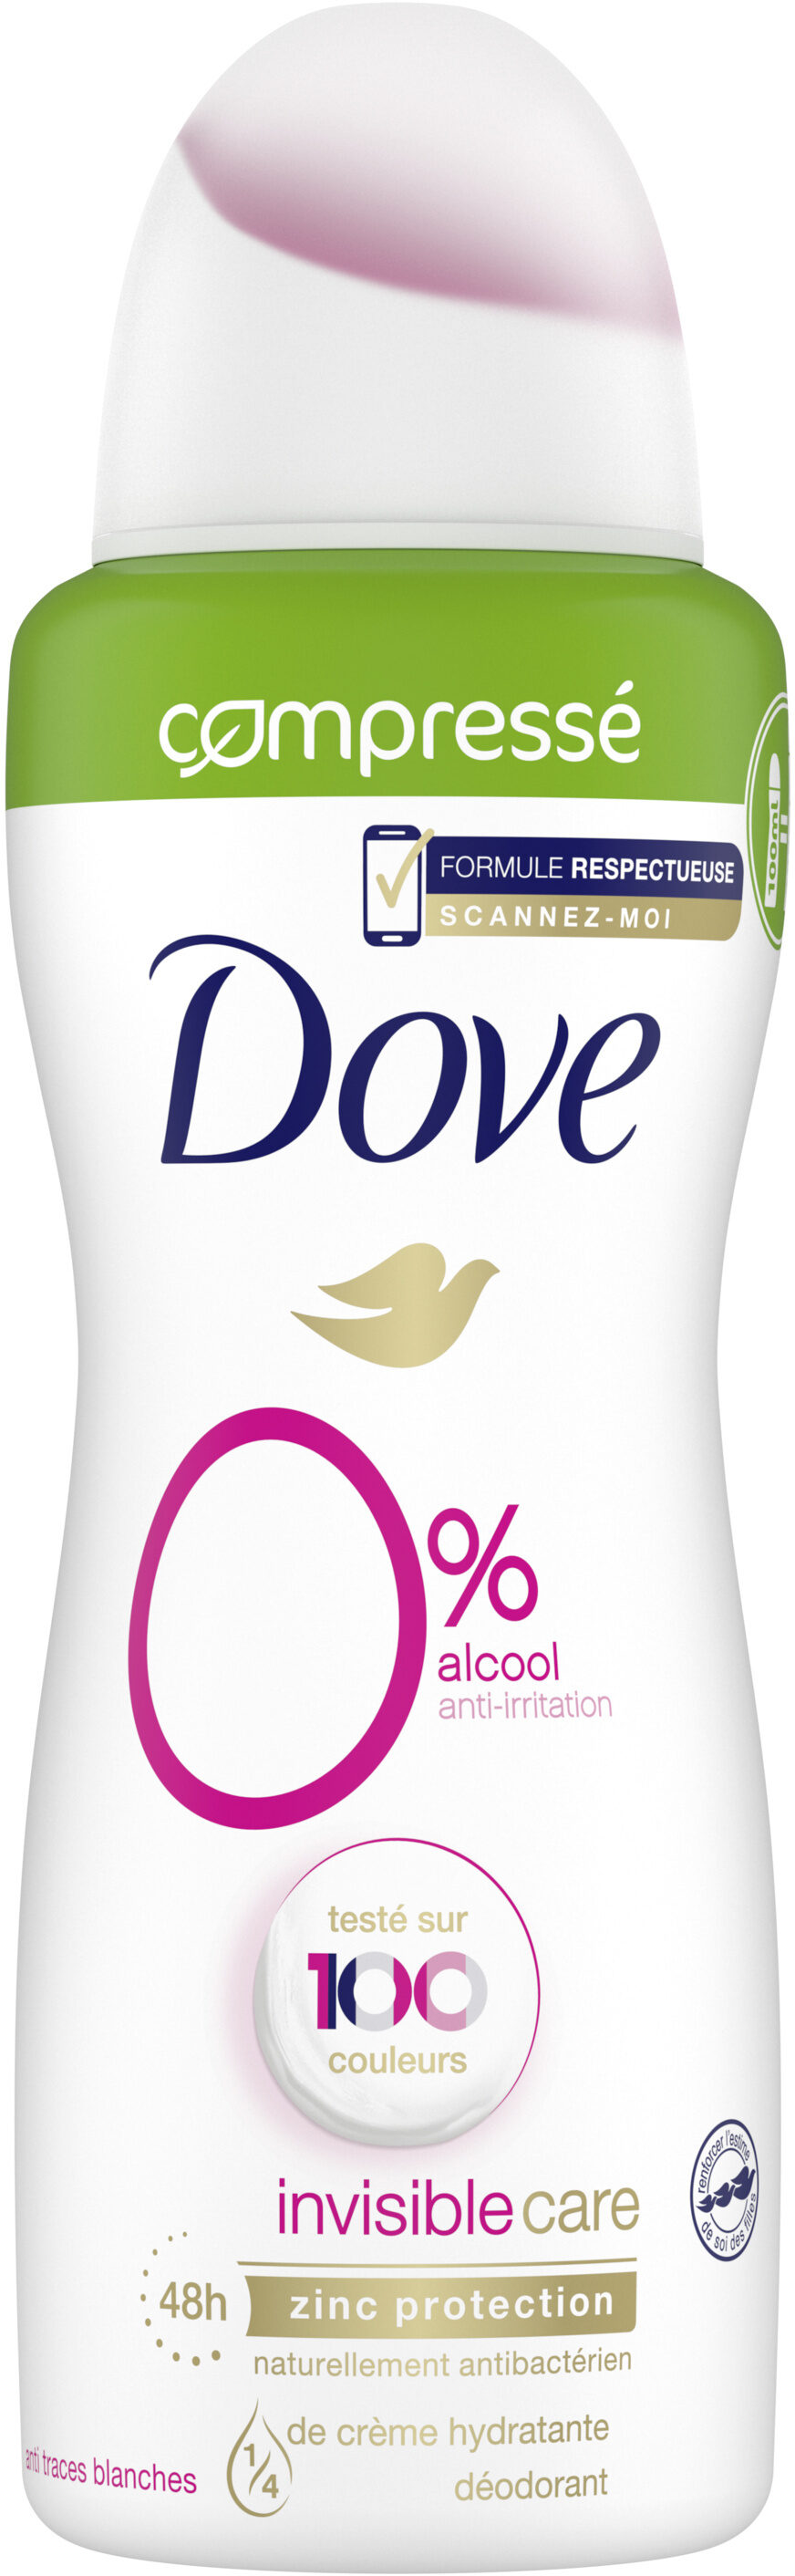 DOVE Déodorant Femme Spray Anti-irritation Invisible Care 100ml - Produto - fr